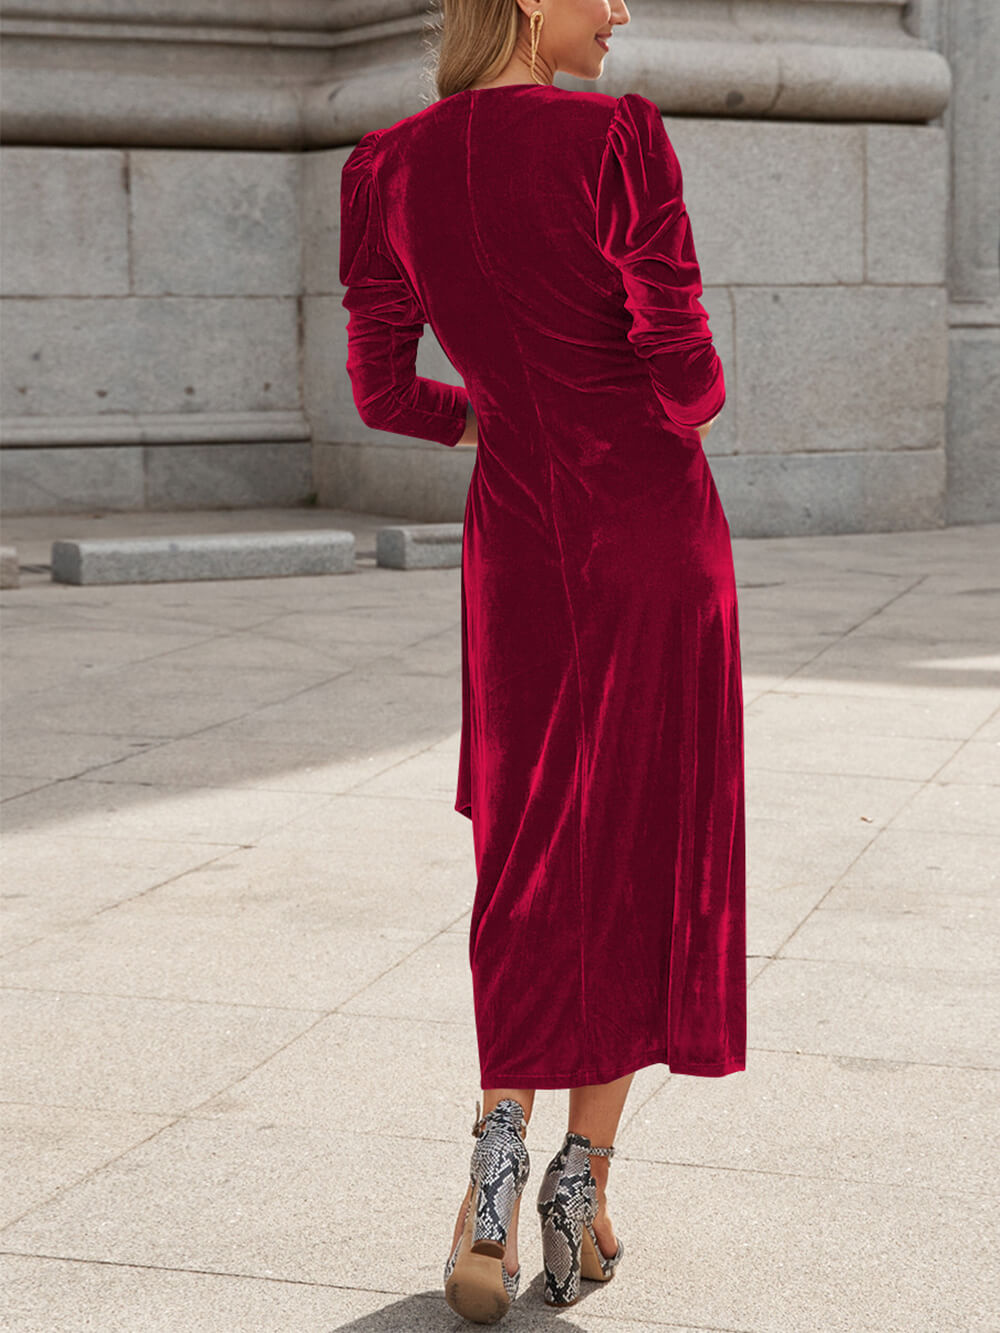 Aksamitna sukienka midi o francuskiej elegancji